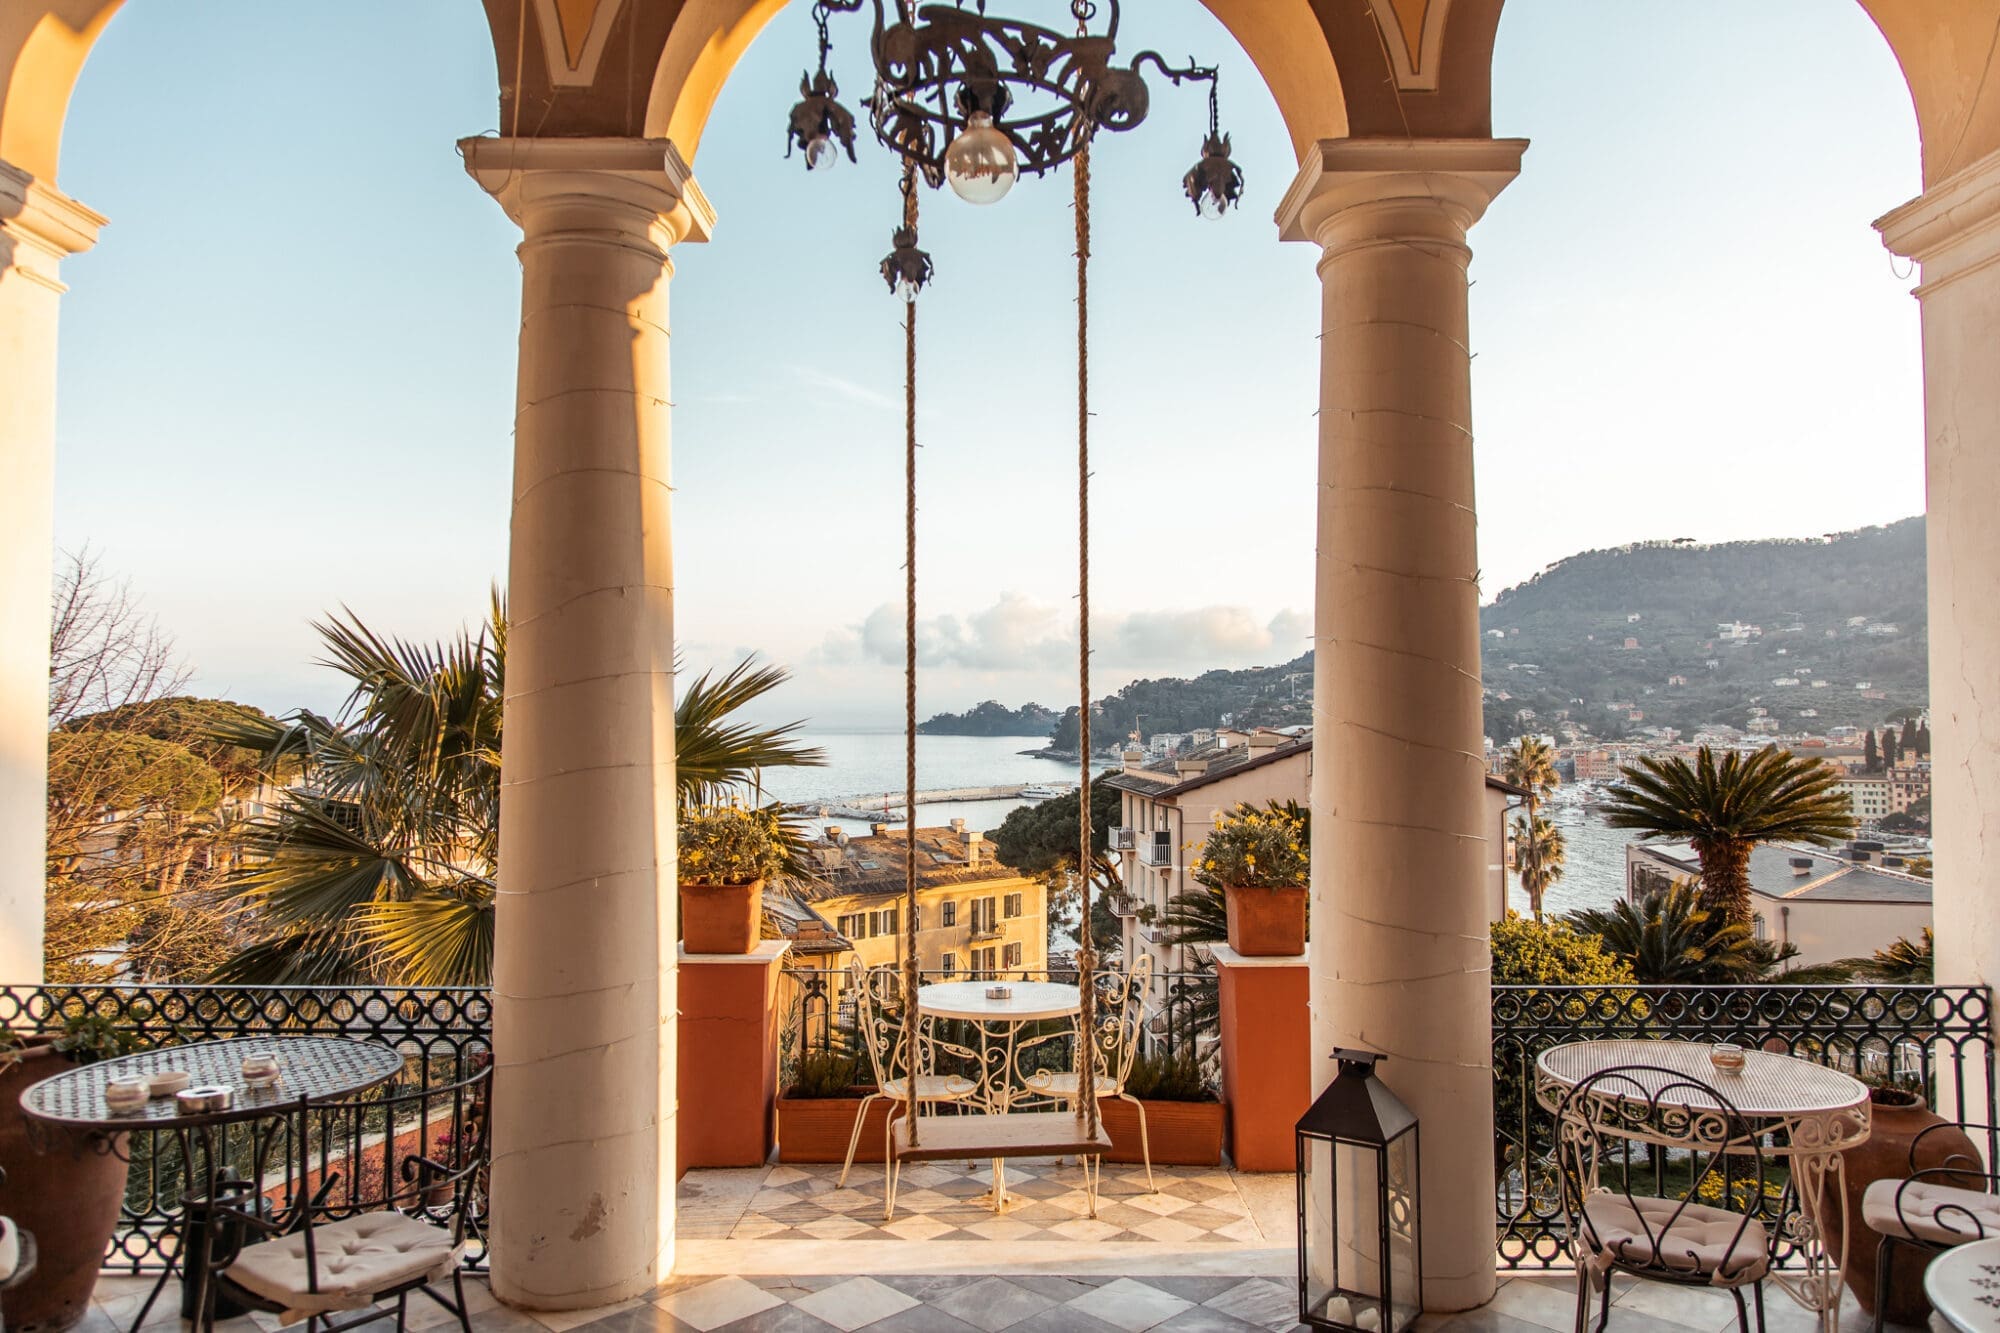 Villa Gelsomino Views Santa Margherita Ligure Hotel Review